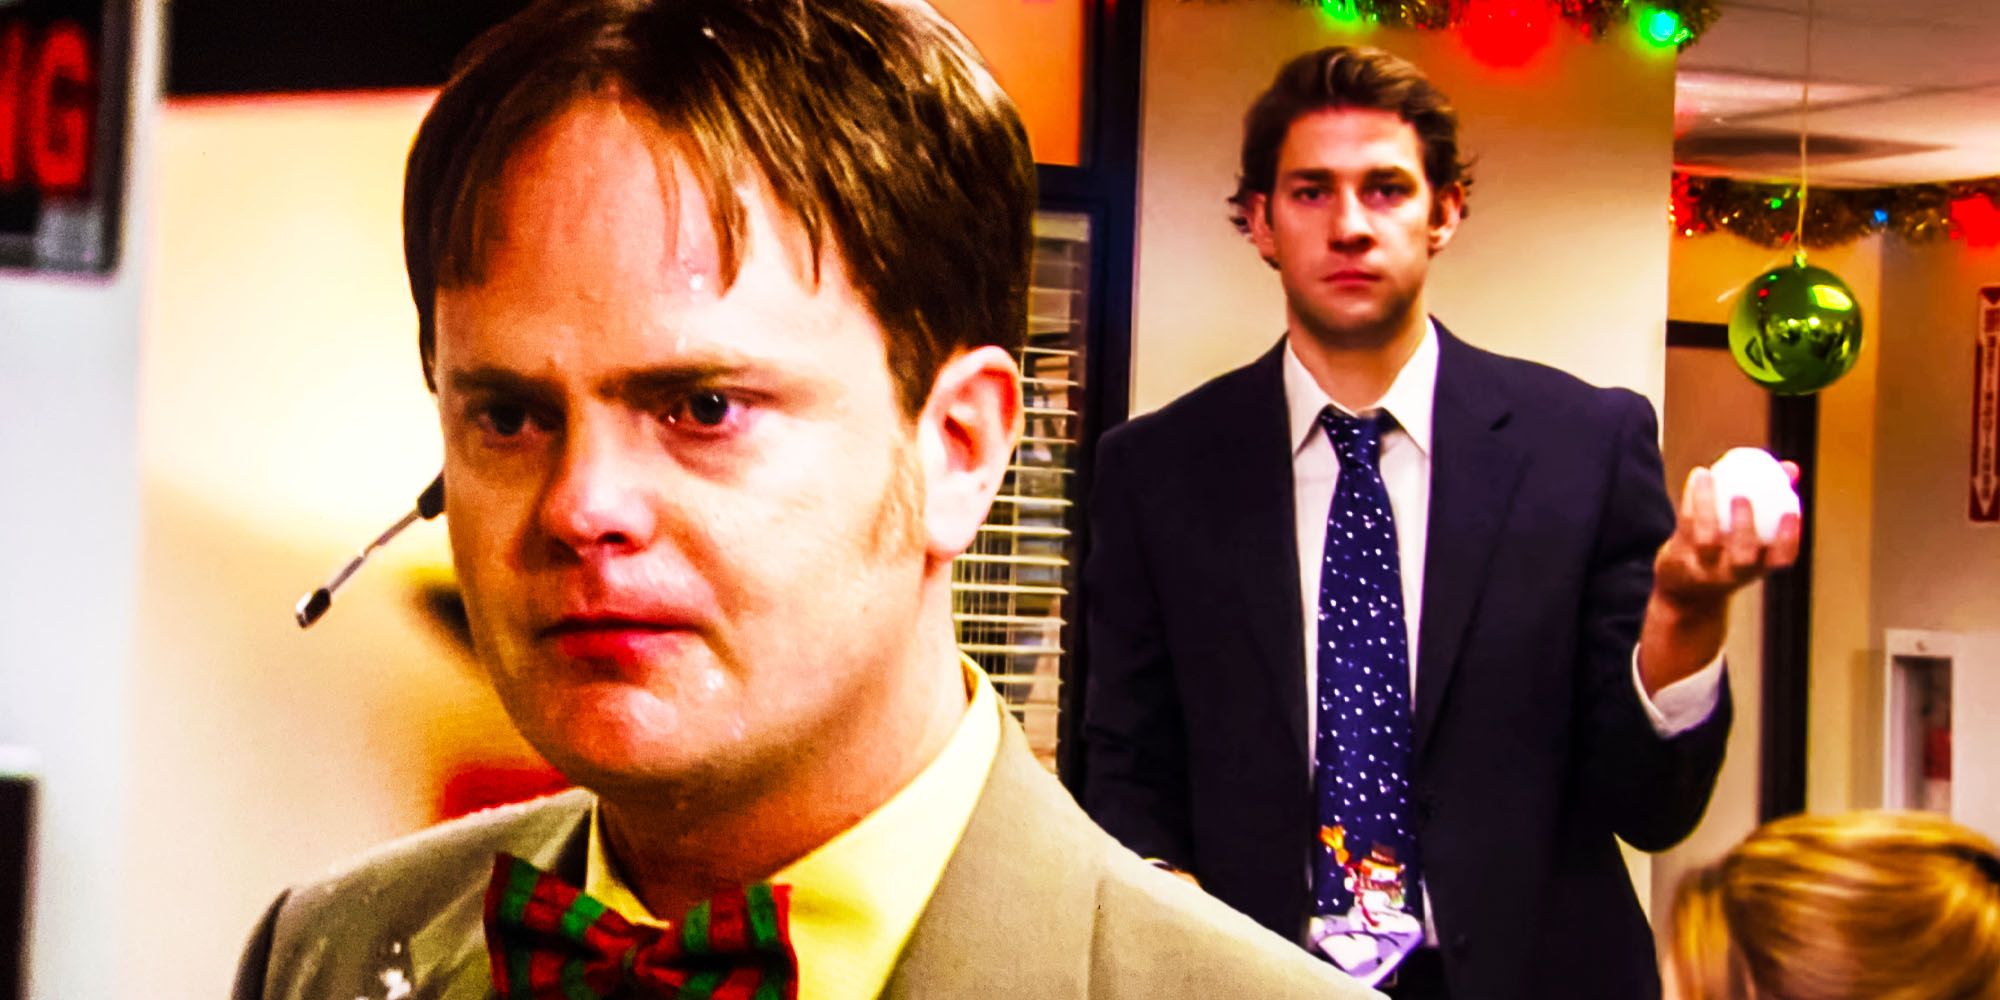 The office Jim pranks Dwight snowball